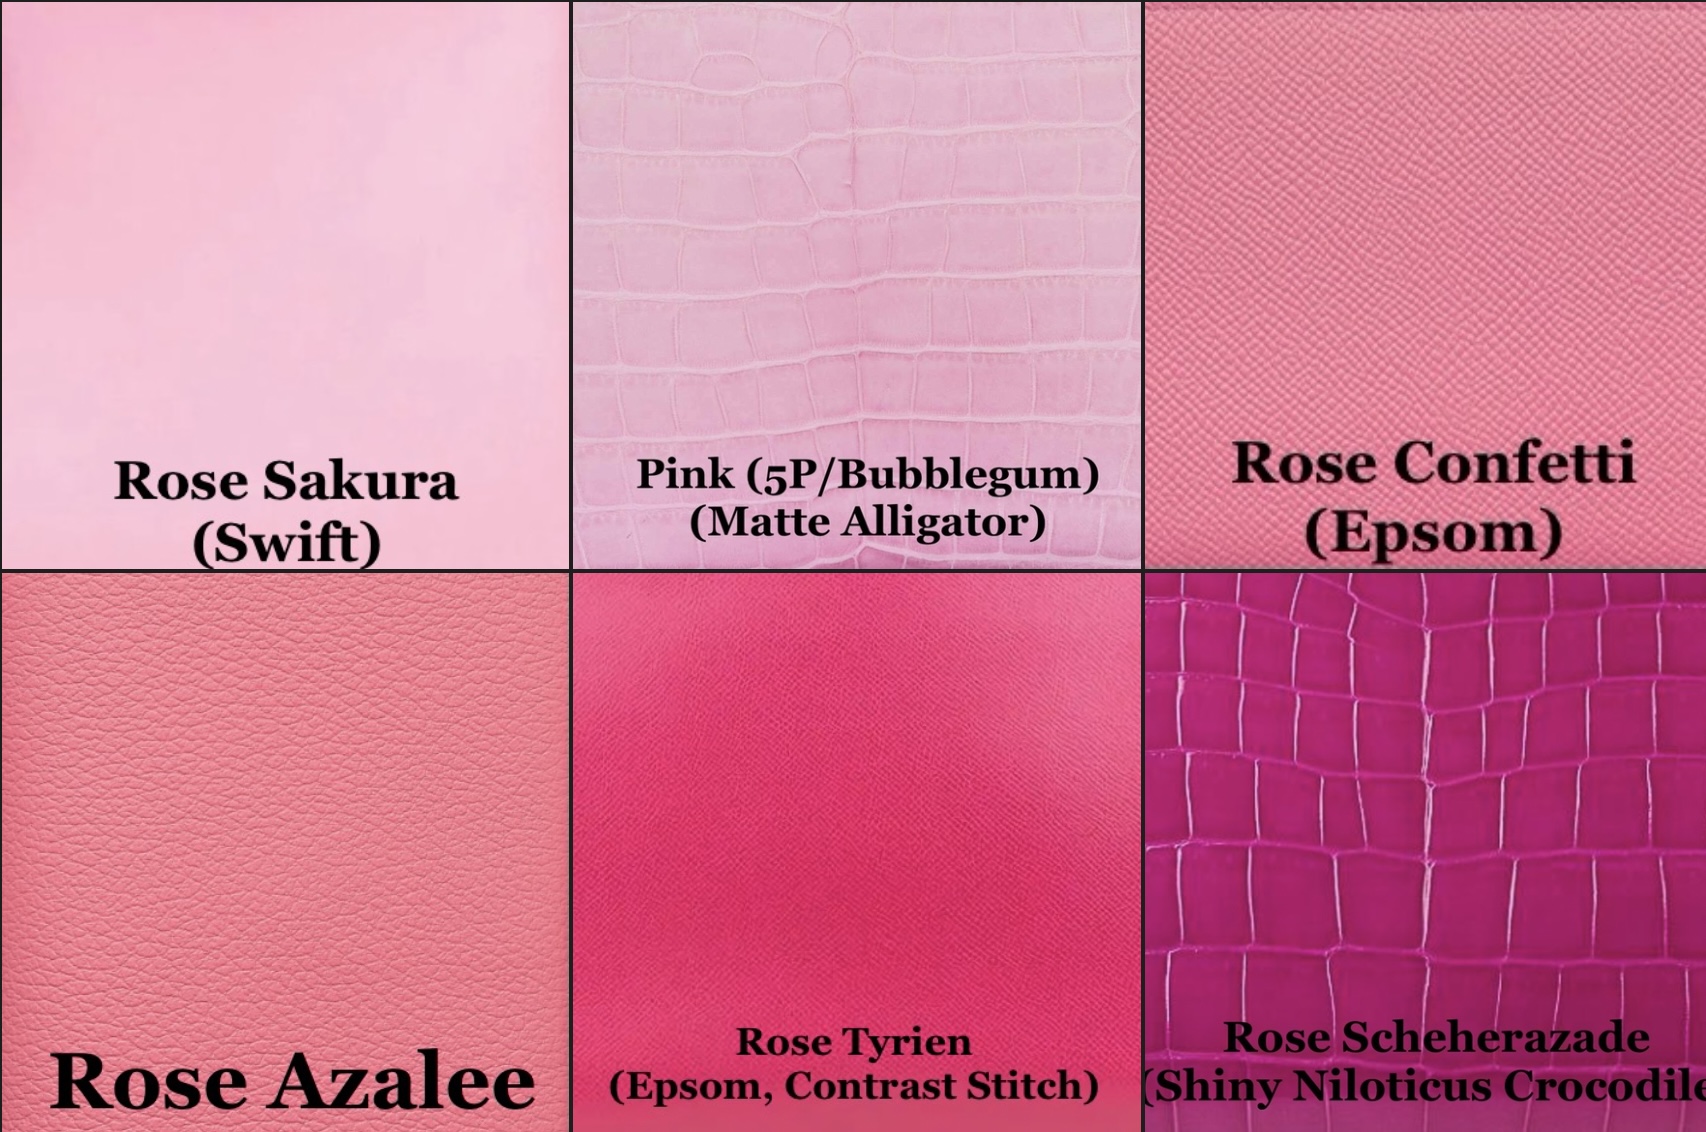 Rose Sakura vs Rose confetti in Epsom-pic request